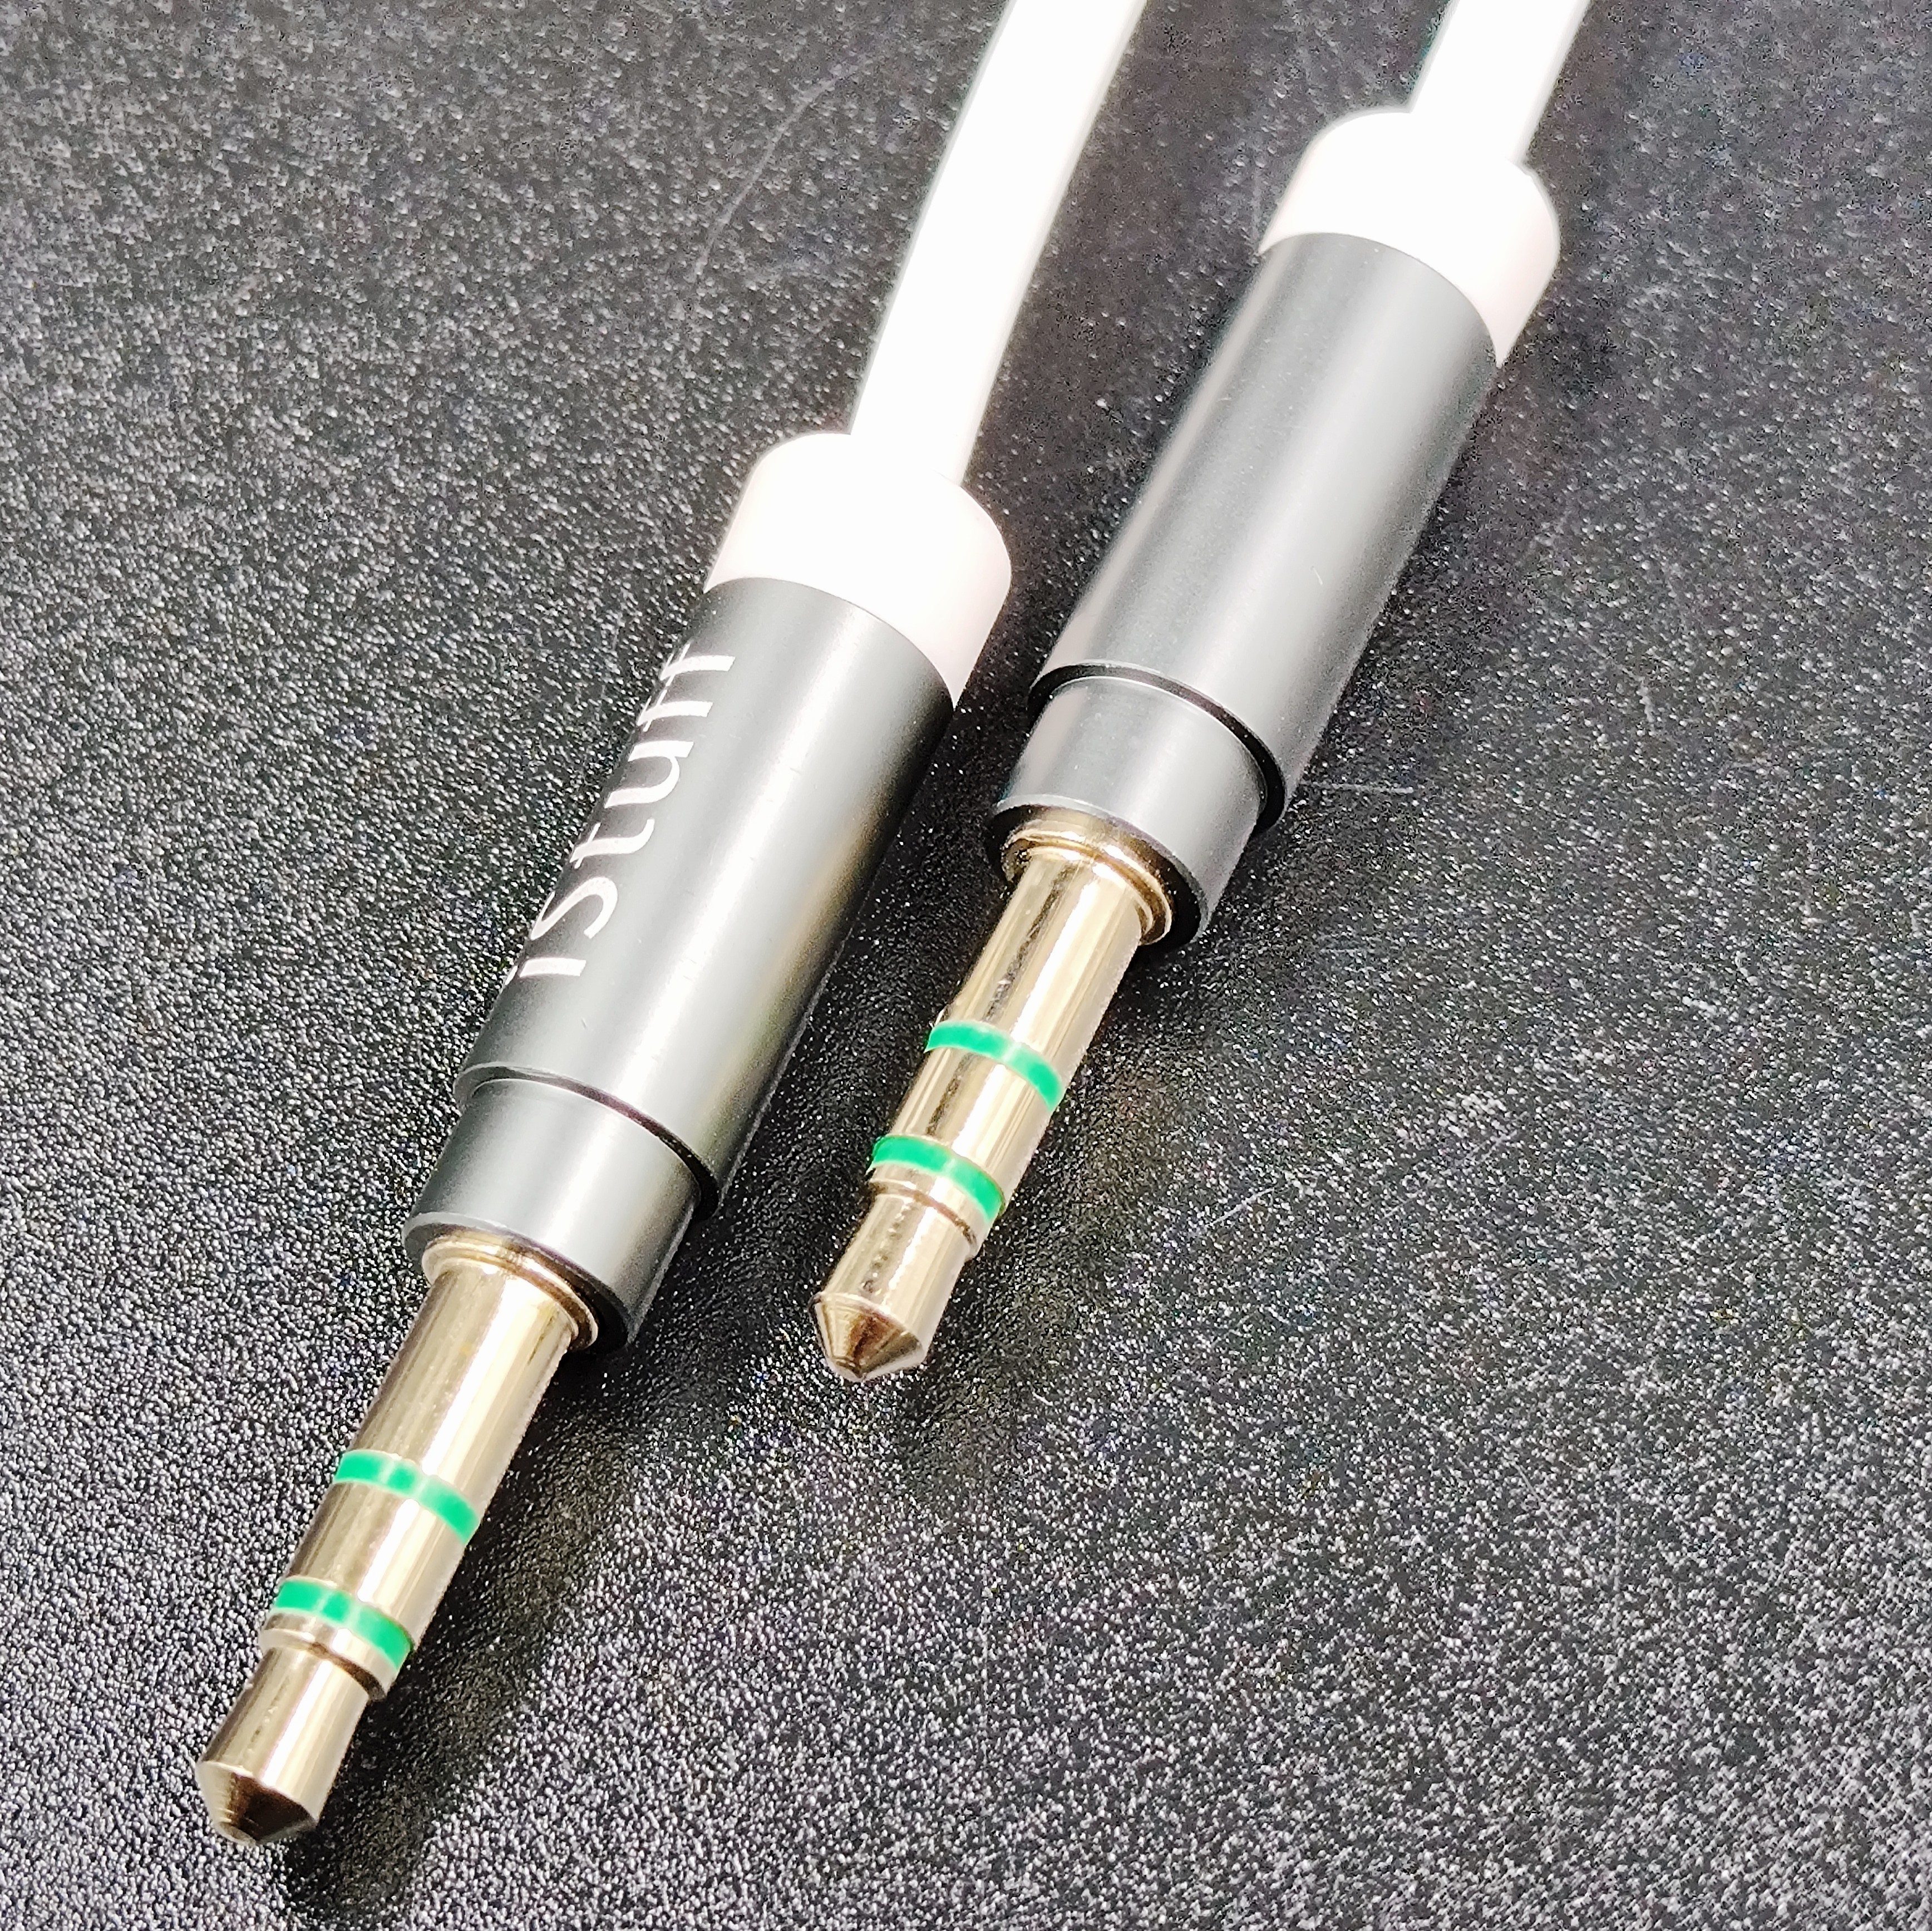 Cable auxiliar plug 3.5mm tipo espiral blanco